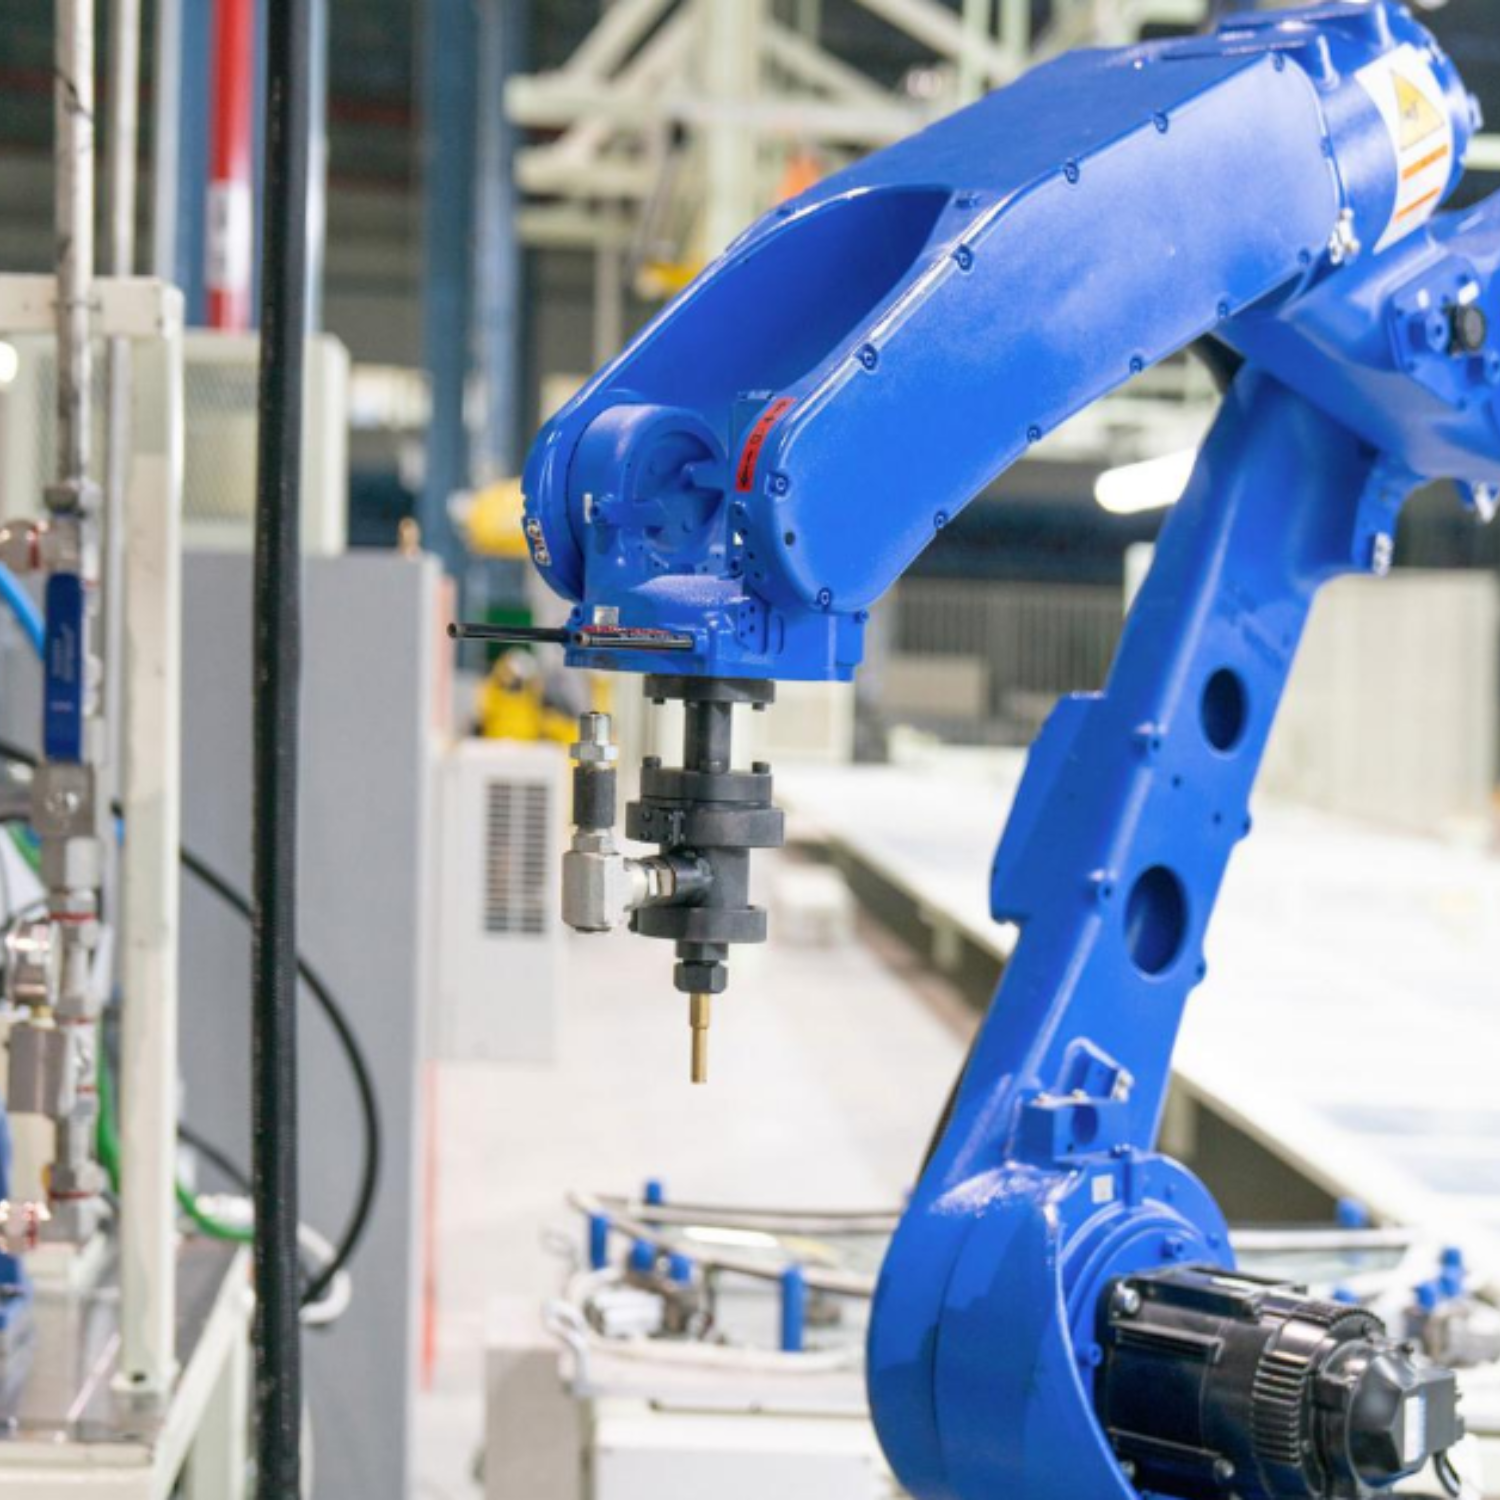 CNC verspaning robotautomatisering cnc-freestechnieken